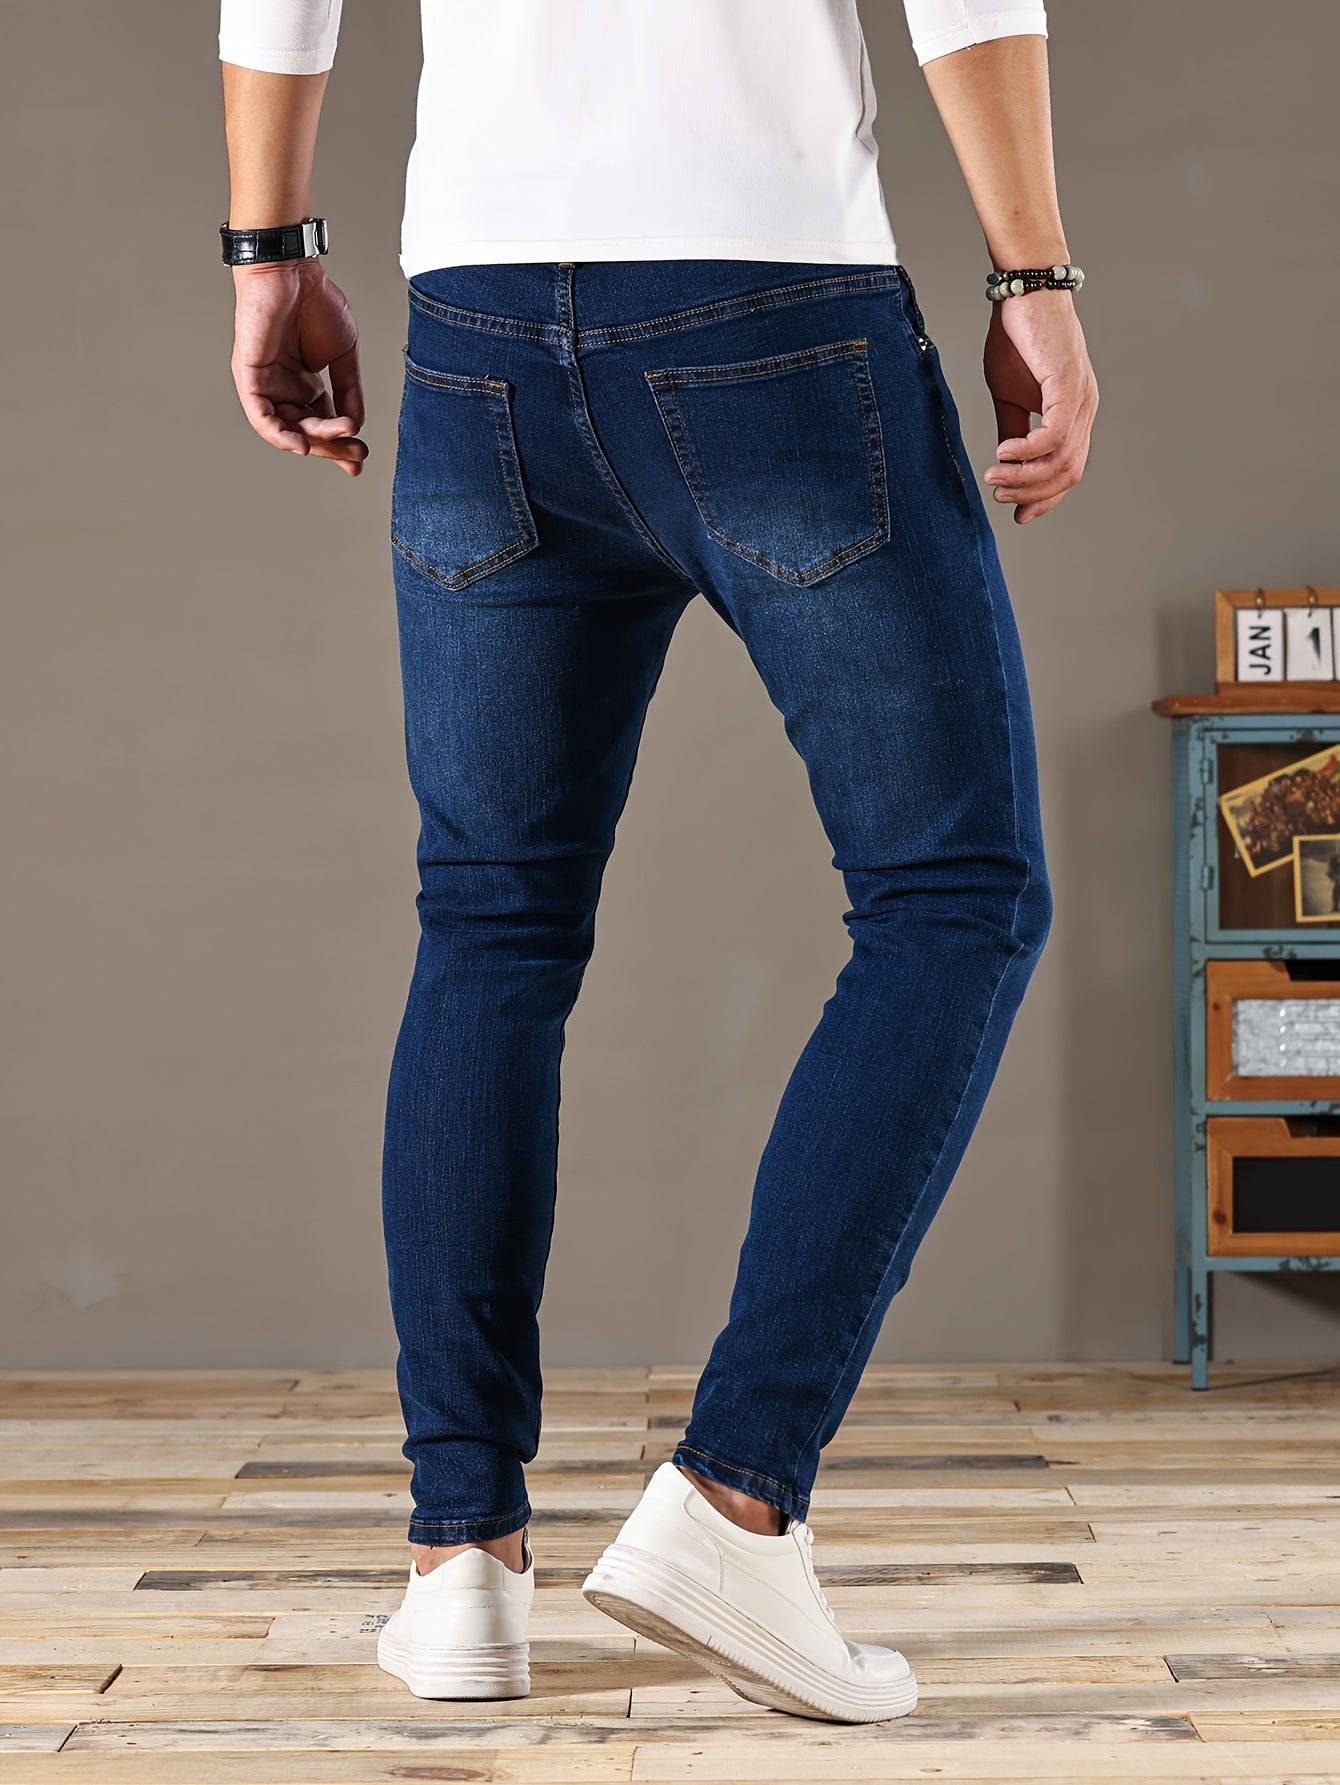 Herren Skinny Jeans - Klassisch, Street Style, Stretch